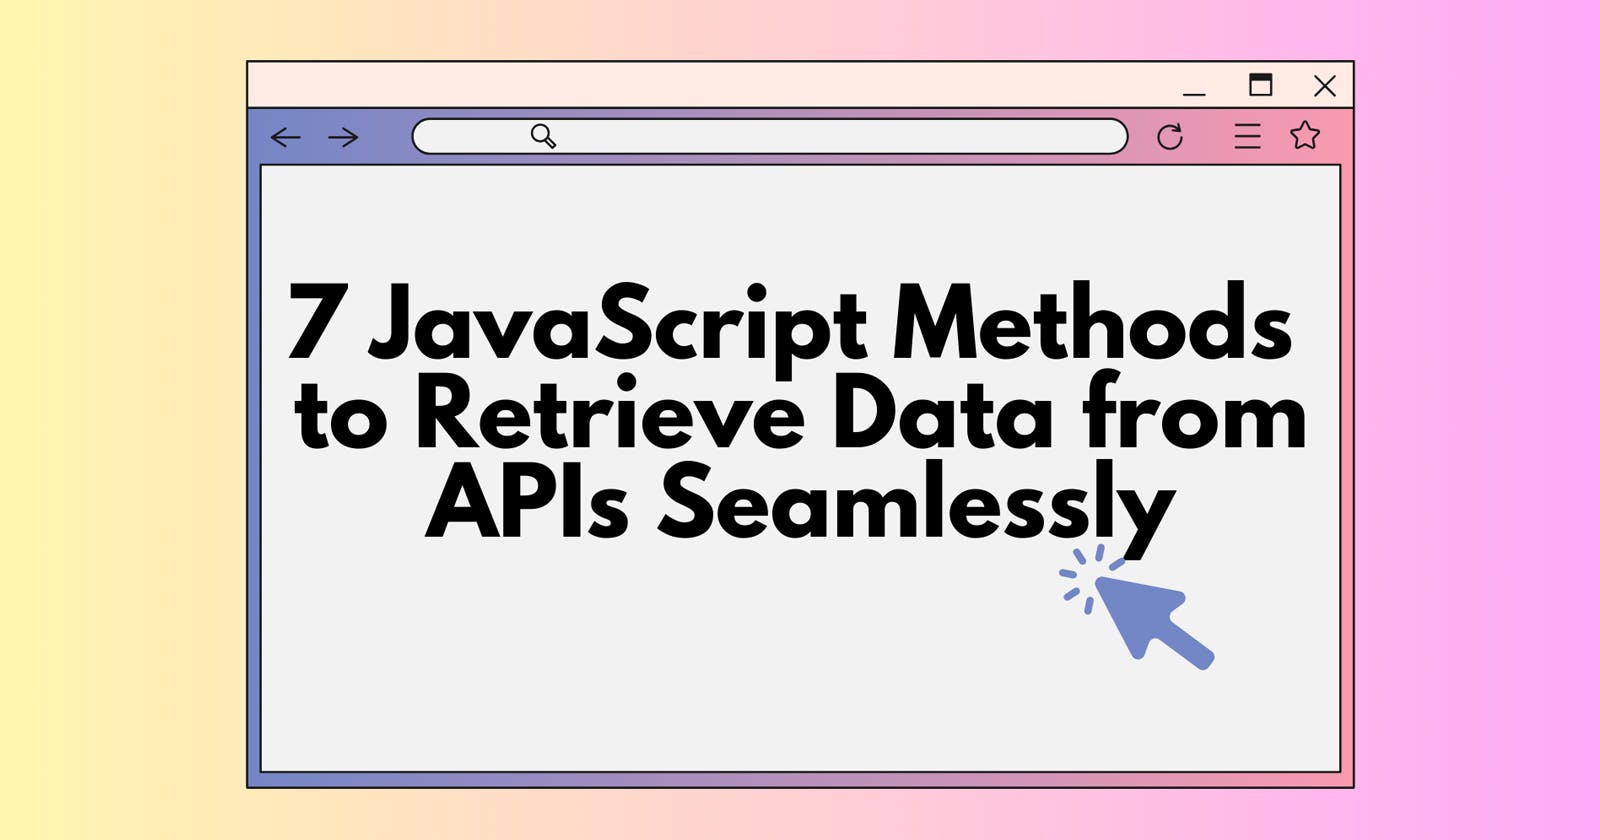 7 JavaScript Methods to Retrieve Data from APIs Seamlessly